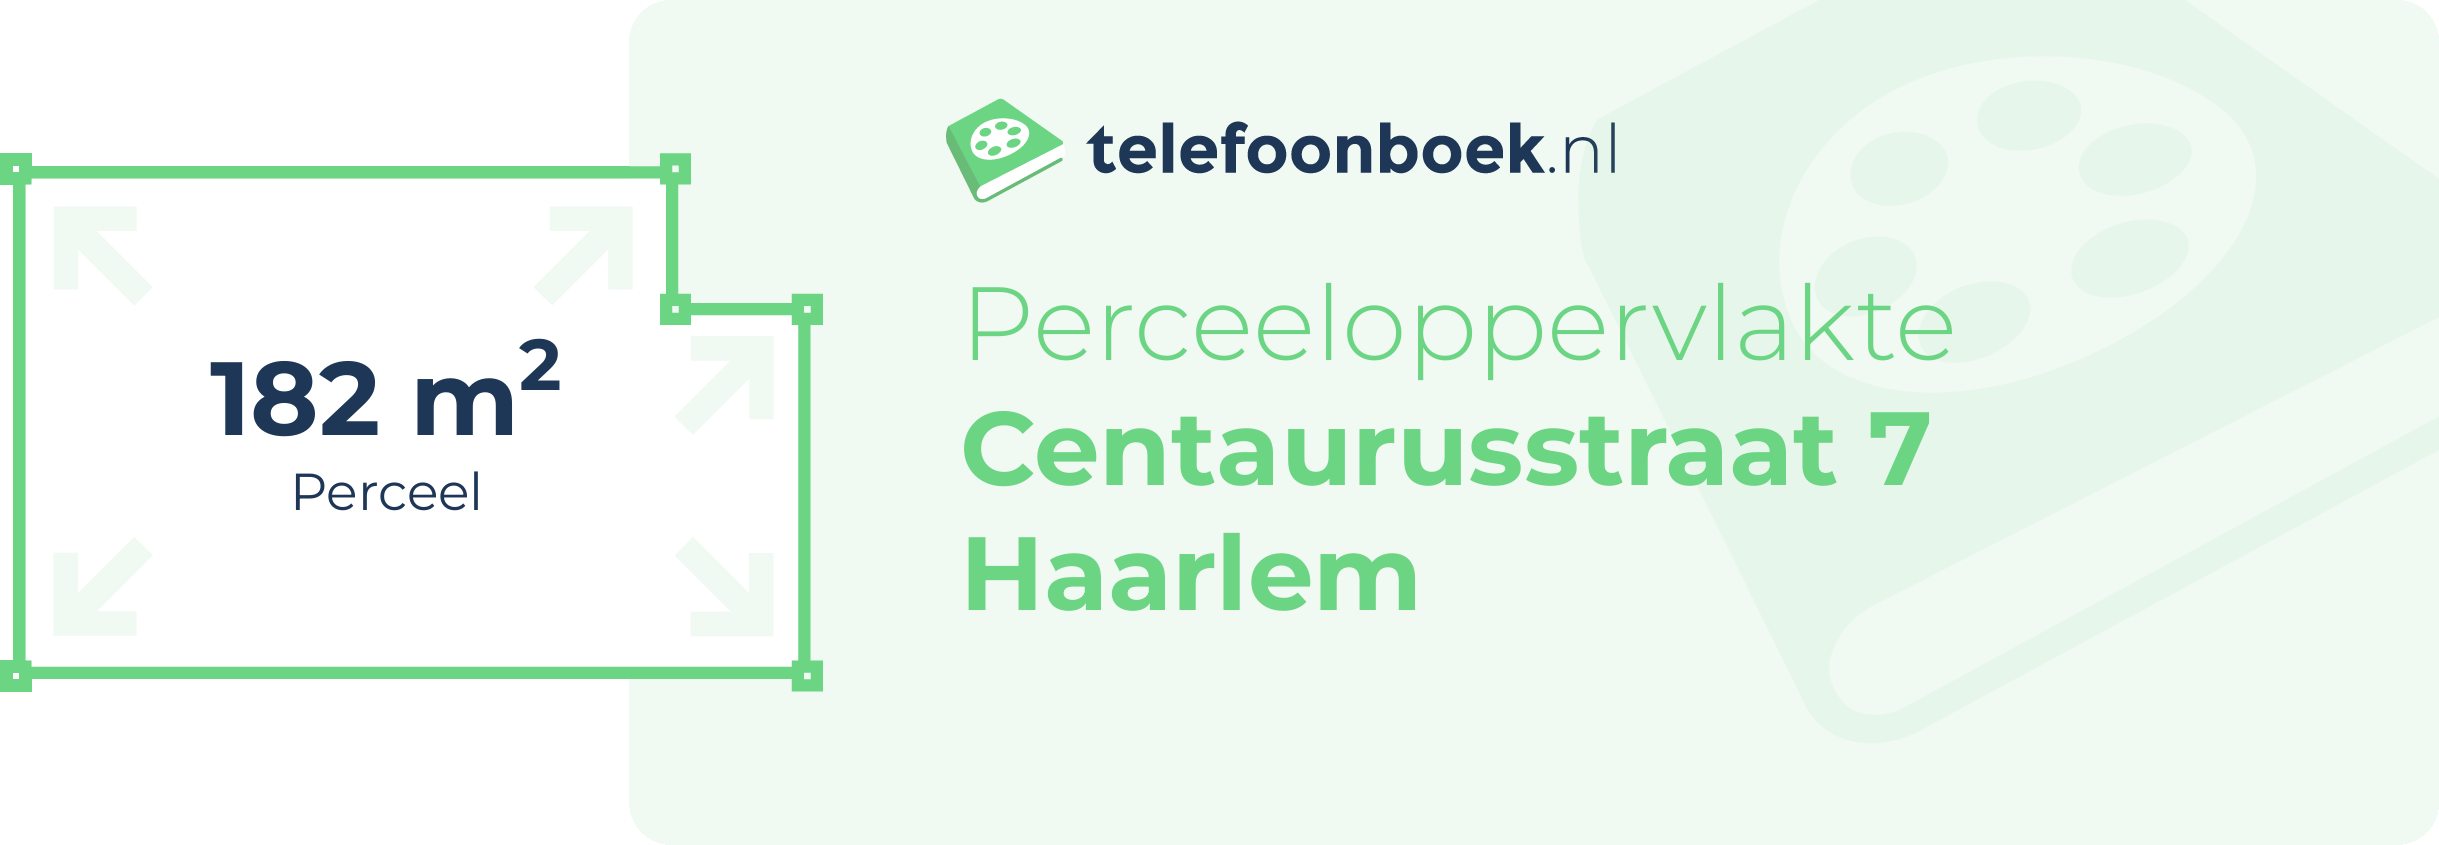 Perceeloppervlakte Centaurusstraat 7 Haarlem